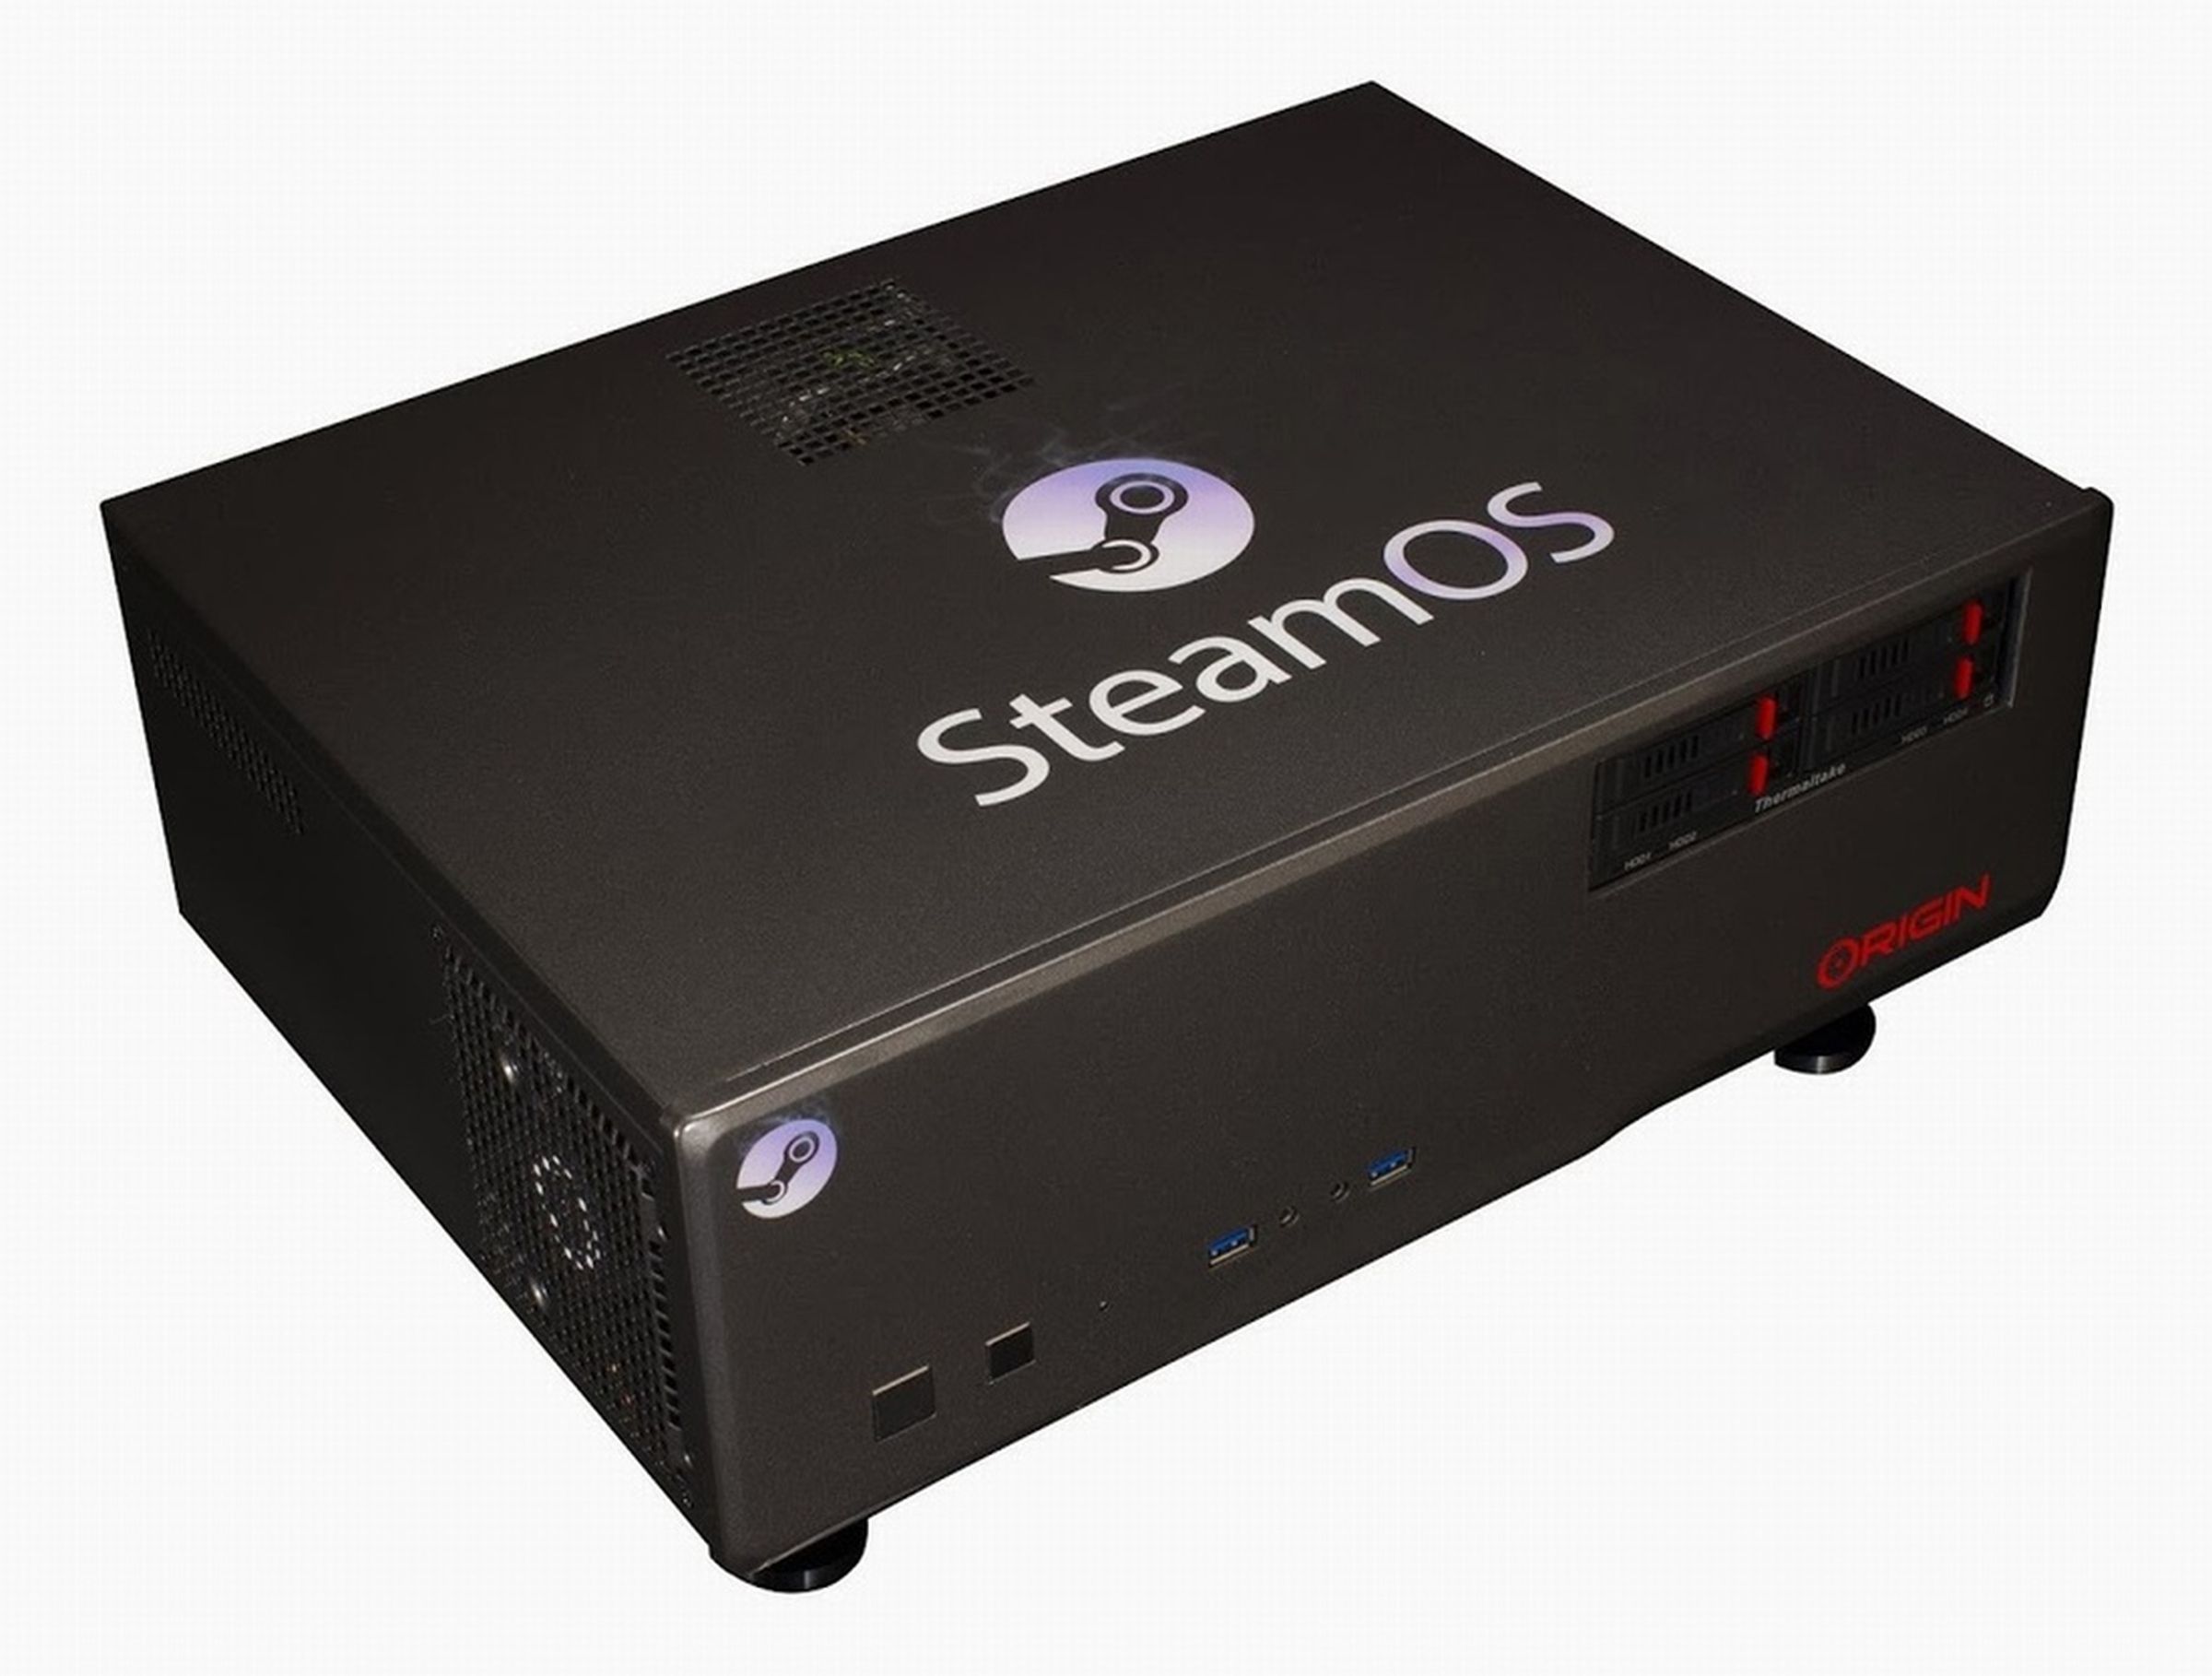 Steam Machines at CES 2014 press photos